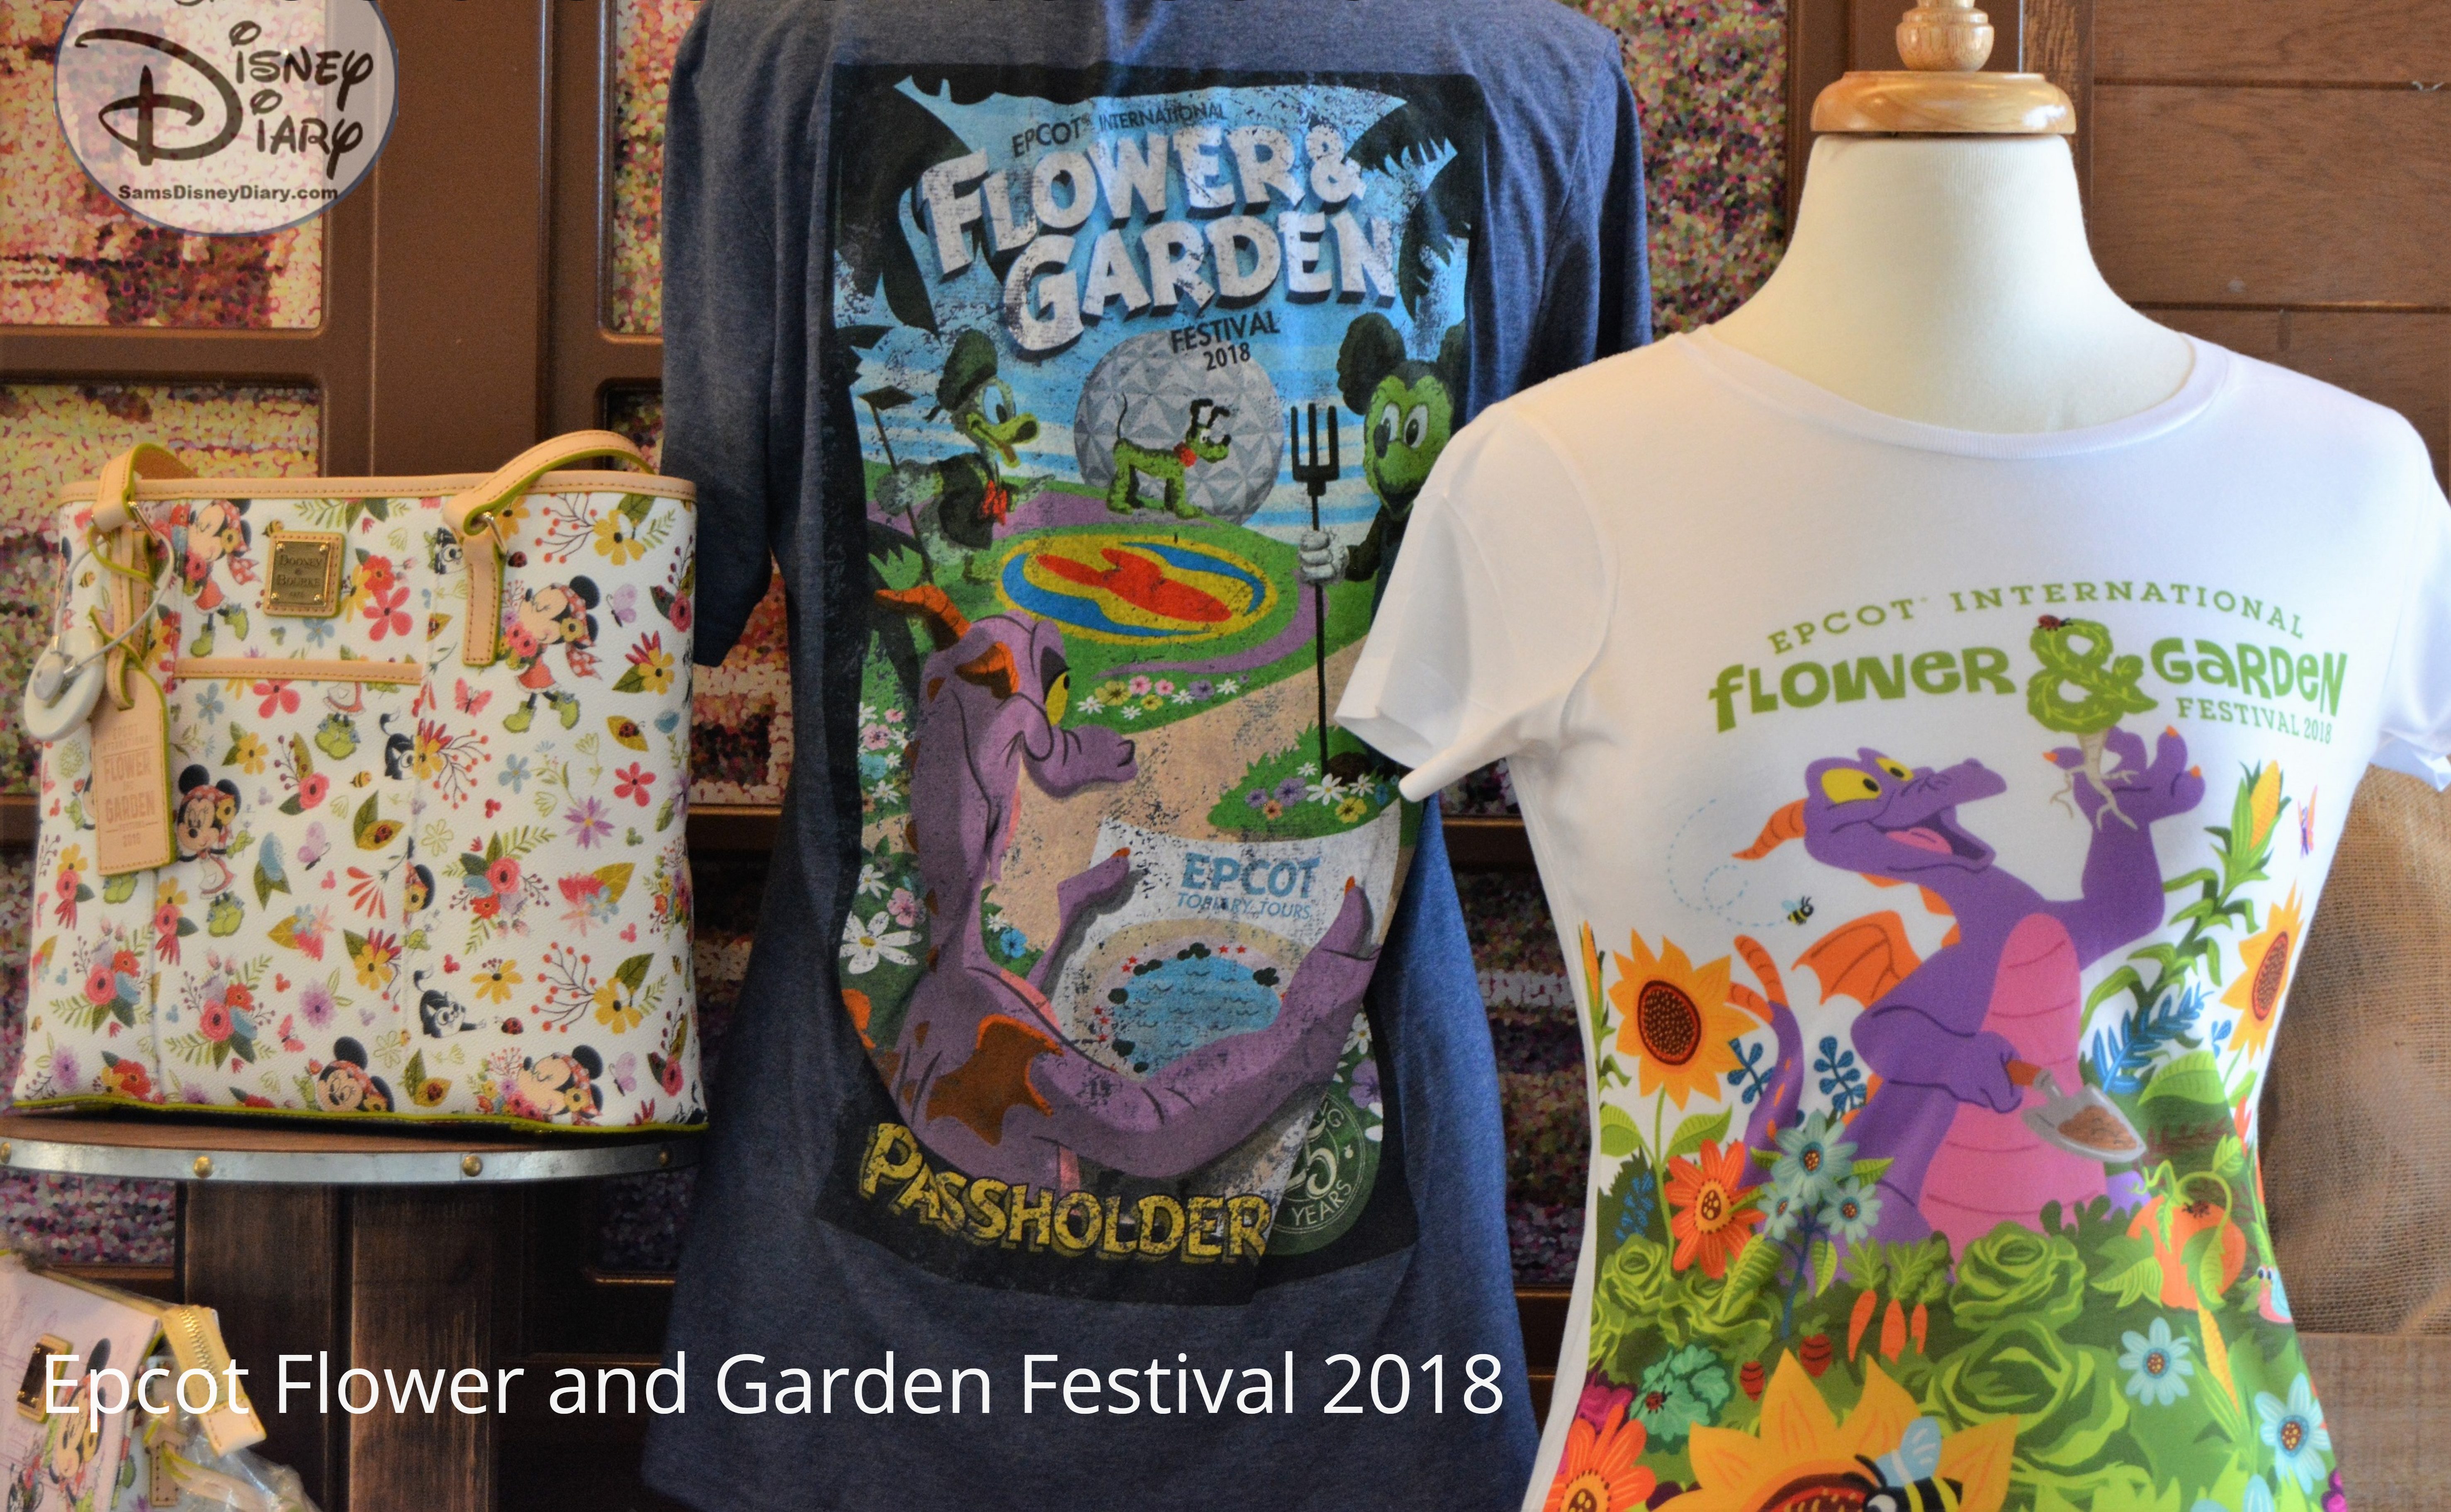 sams disney diary epcot flower and garden 2018 merchandise (8